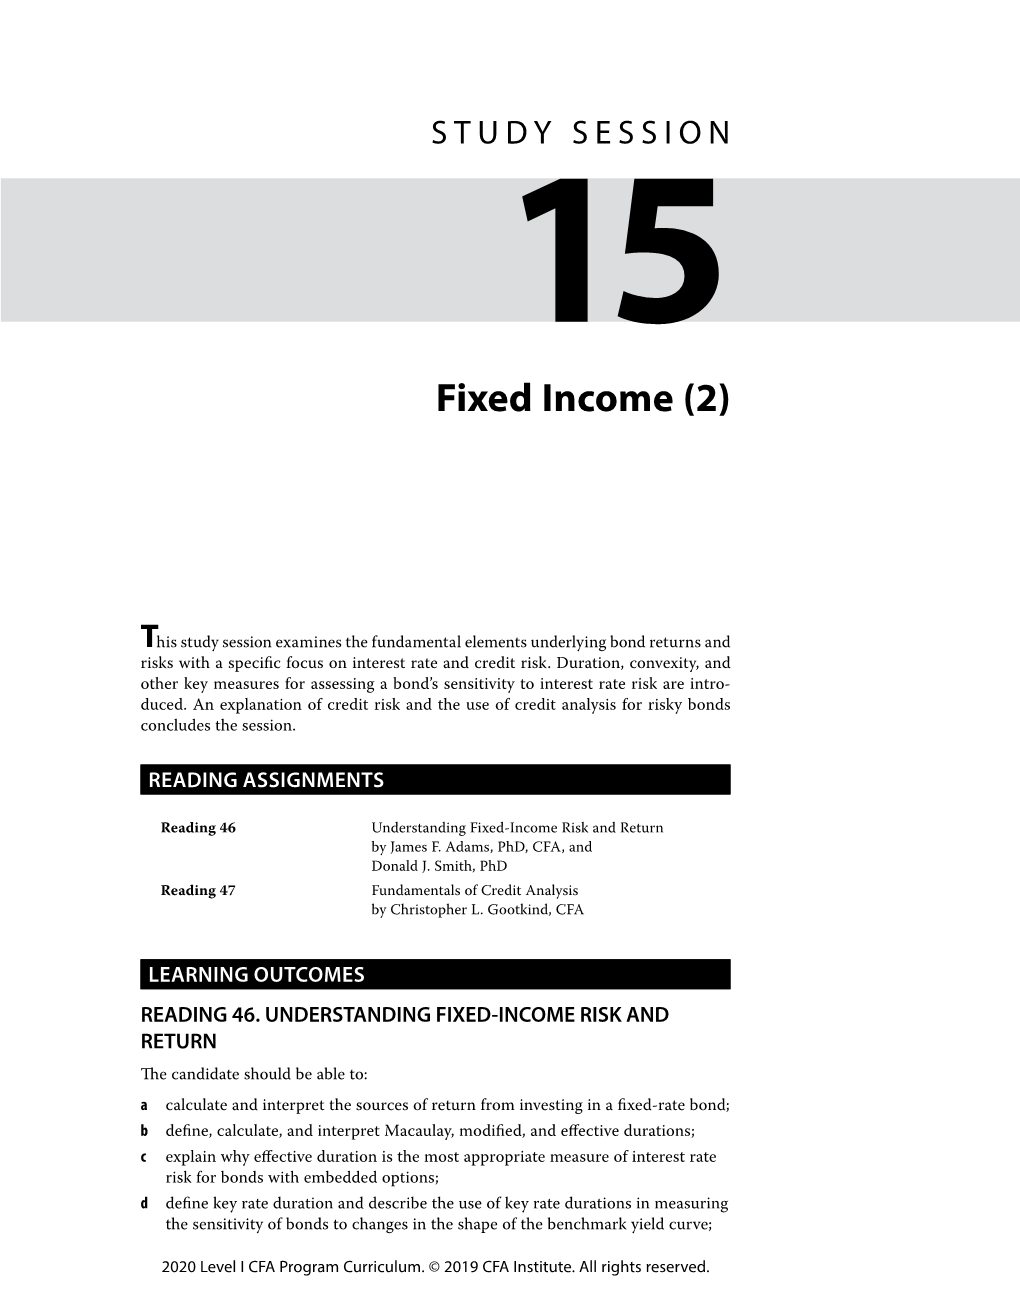 Fixed Income (2)